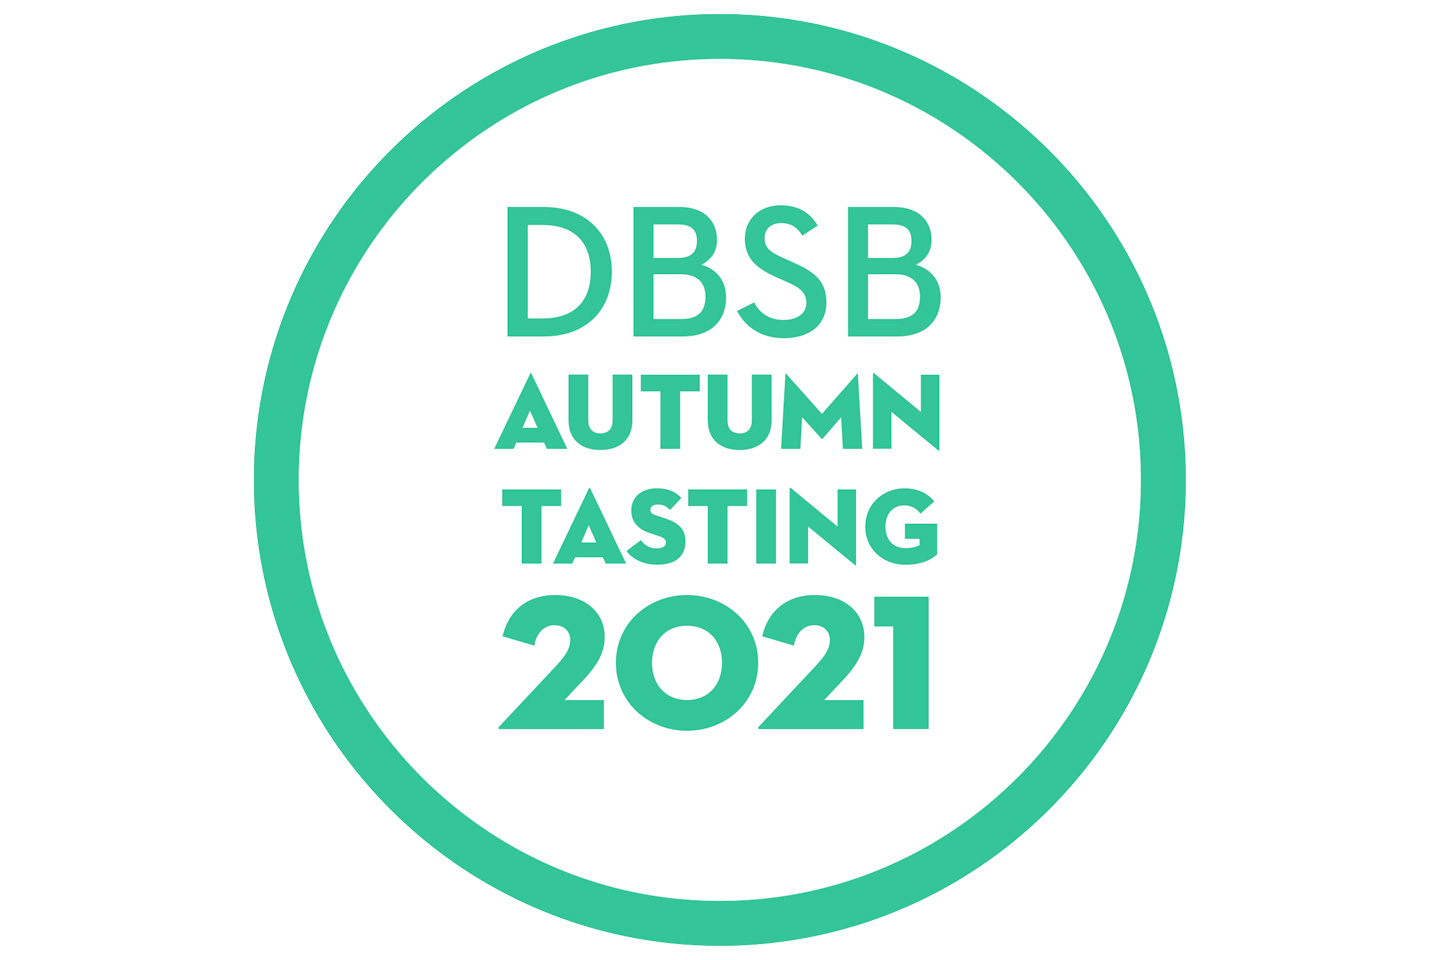 The DB & SB Autumn Tasting 2021